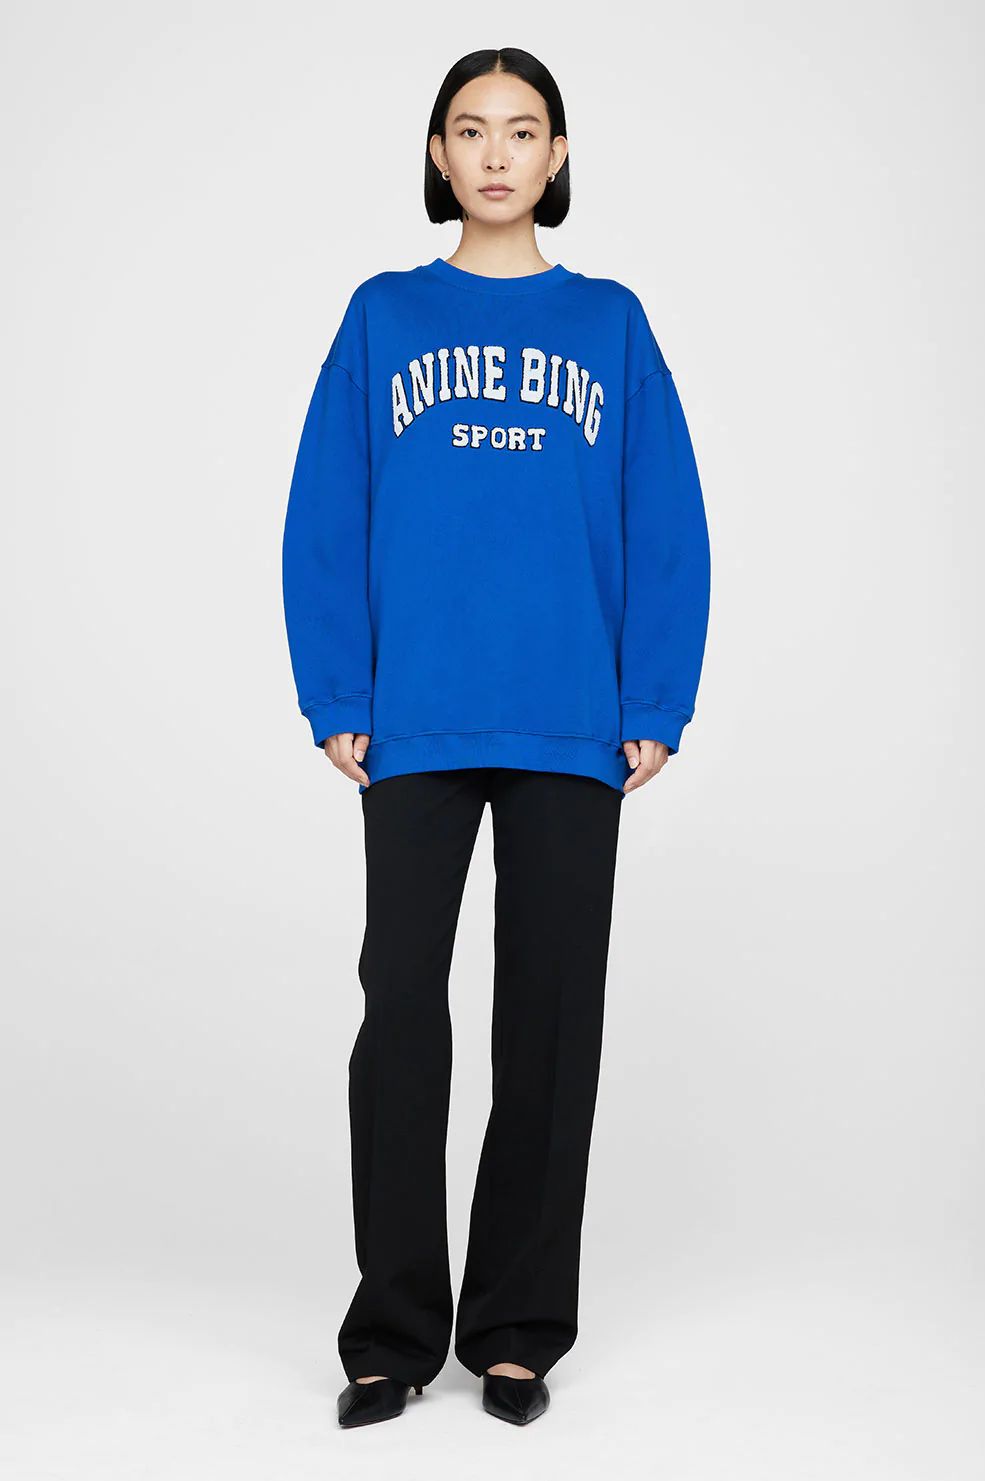 ANINE BING Tyler Sweatshirt in Electric Blue | Anine Bing